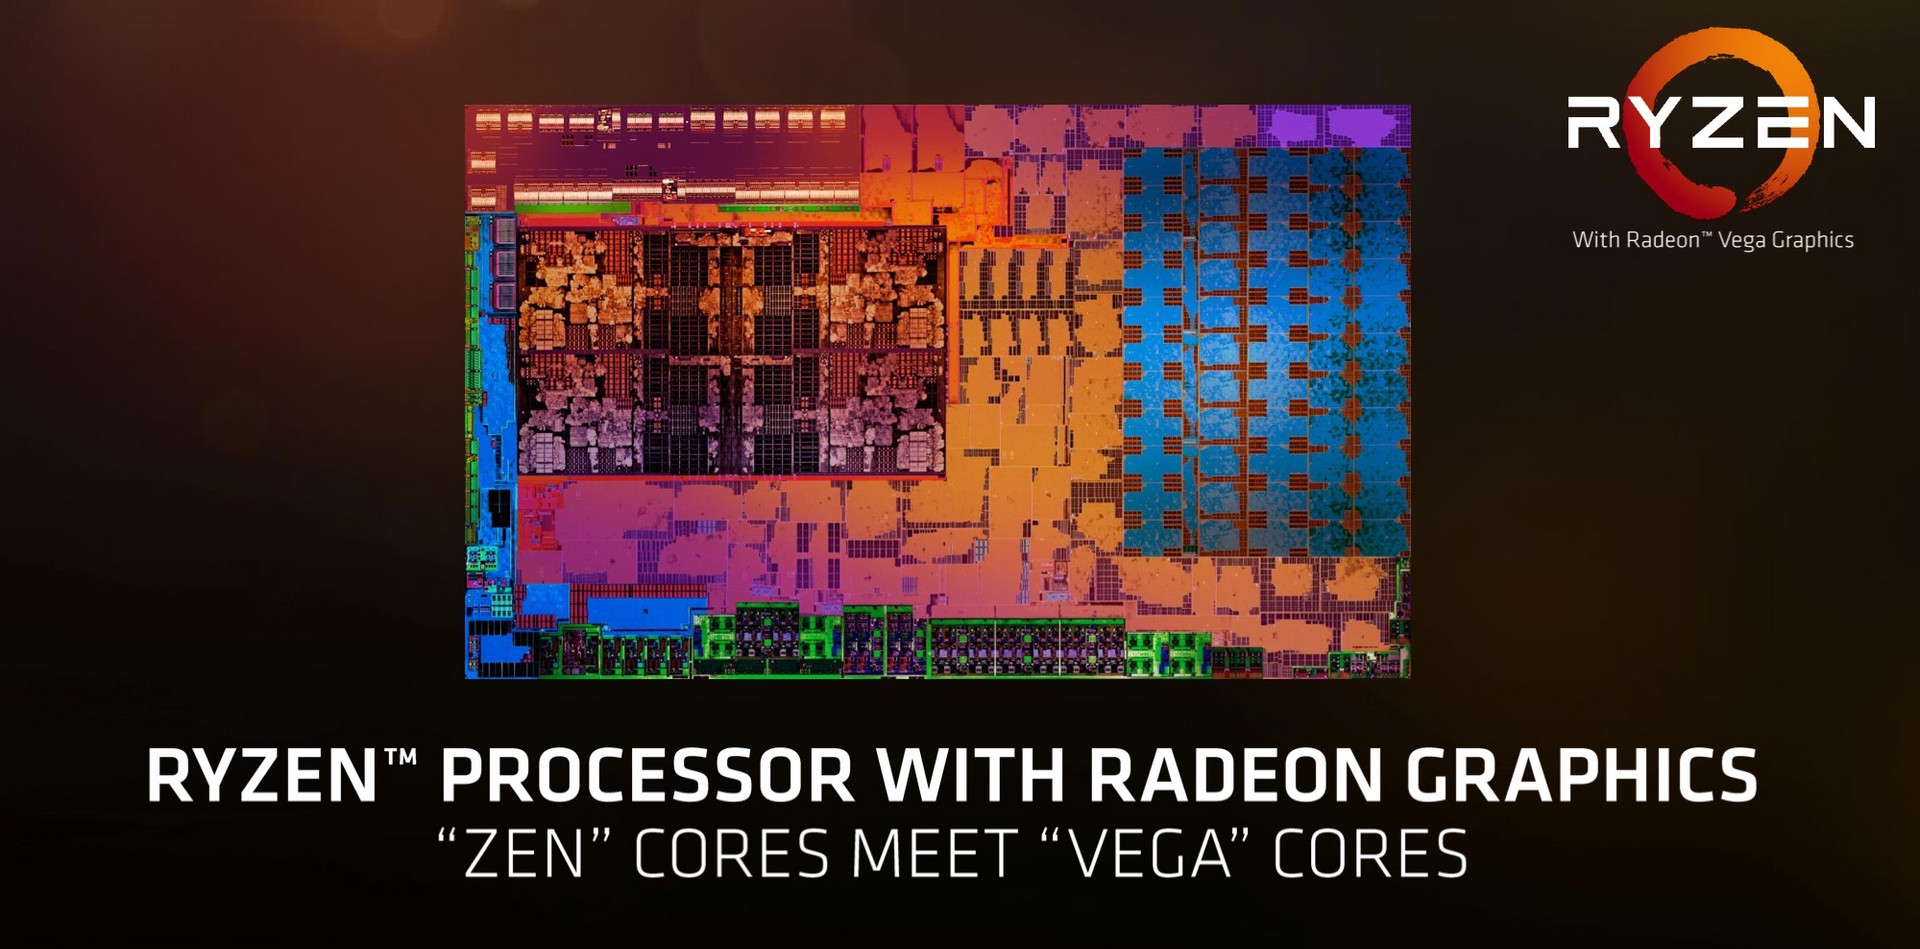 amd ryzen 4000 renoir am4 desktop cpu apu zen 2 7nm vega พบข้อมูลซีพียู AMD Ryzen 7 4700G ในรหัส Renoir สถาปัตย์ Zen 2 และการ์ดจอ Vega APUs ขนาด 7nm 